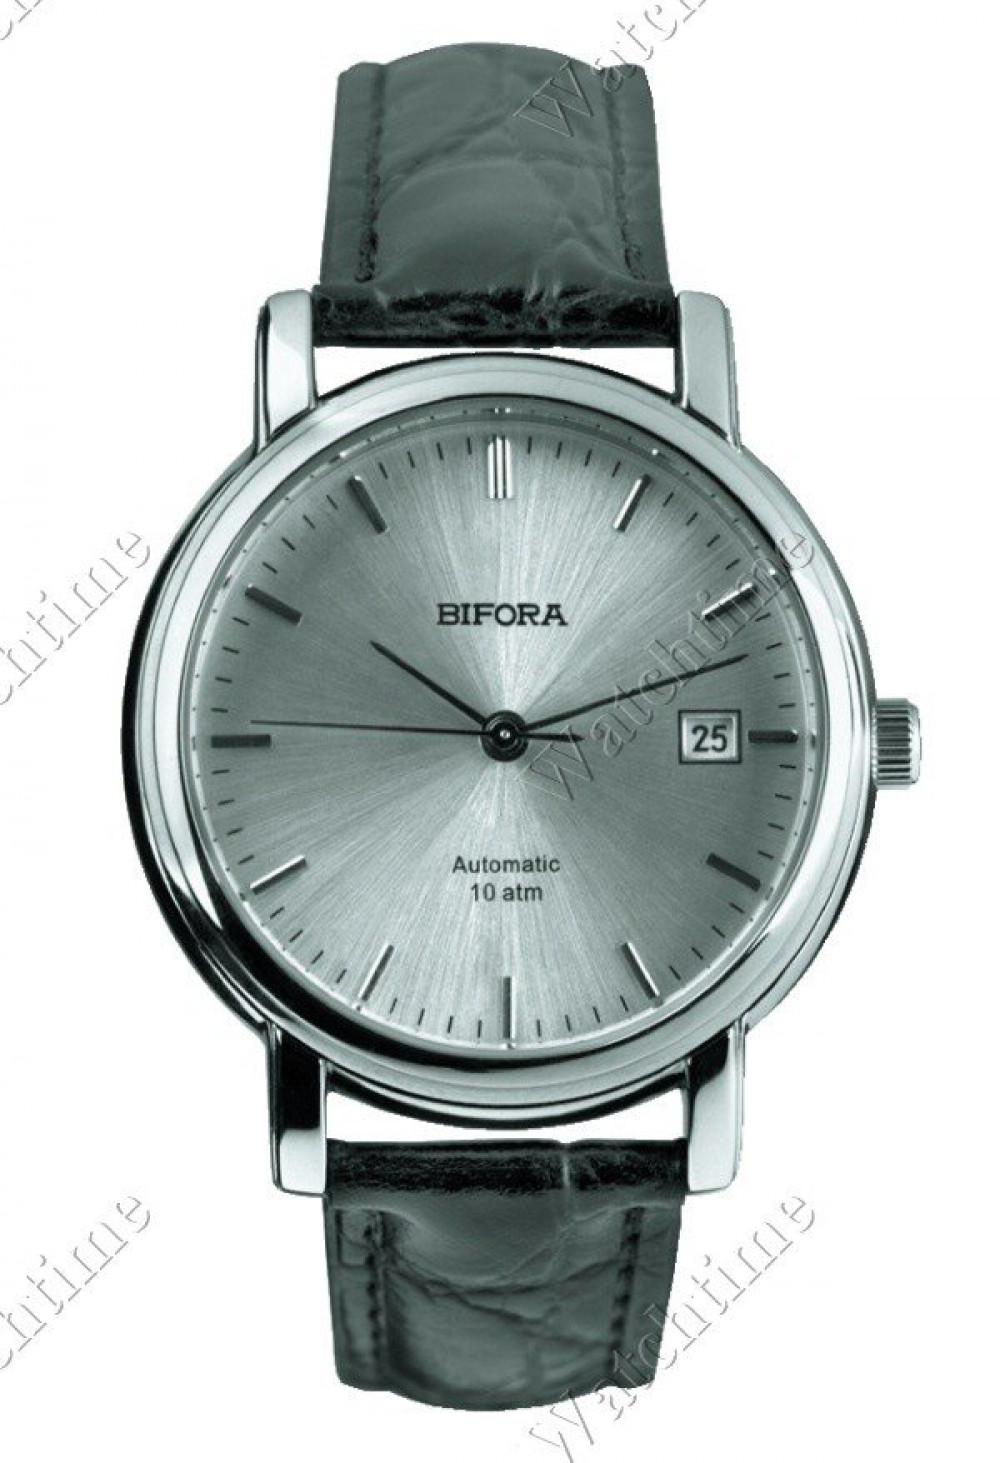 Zegarek firmy Bifora, model Automatic